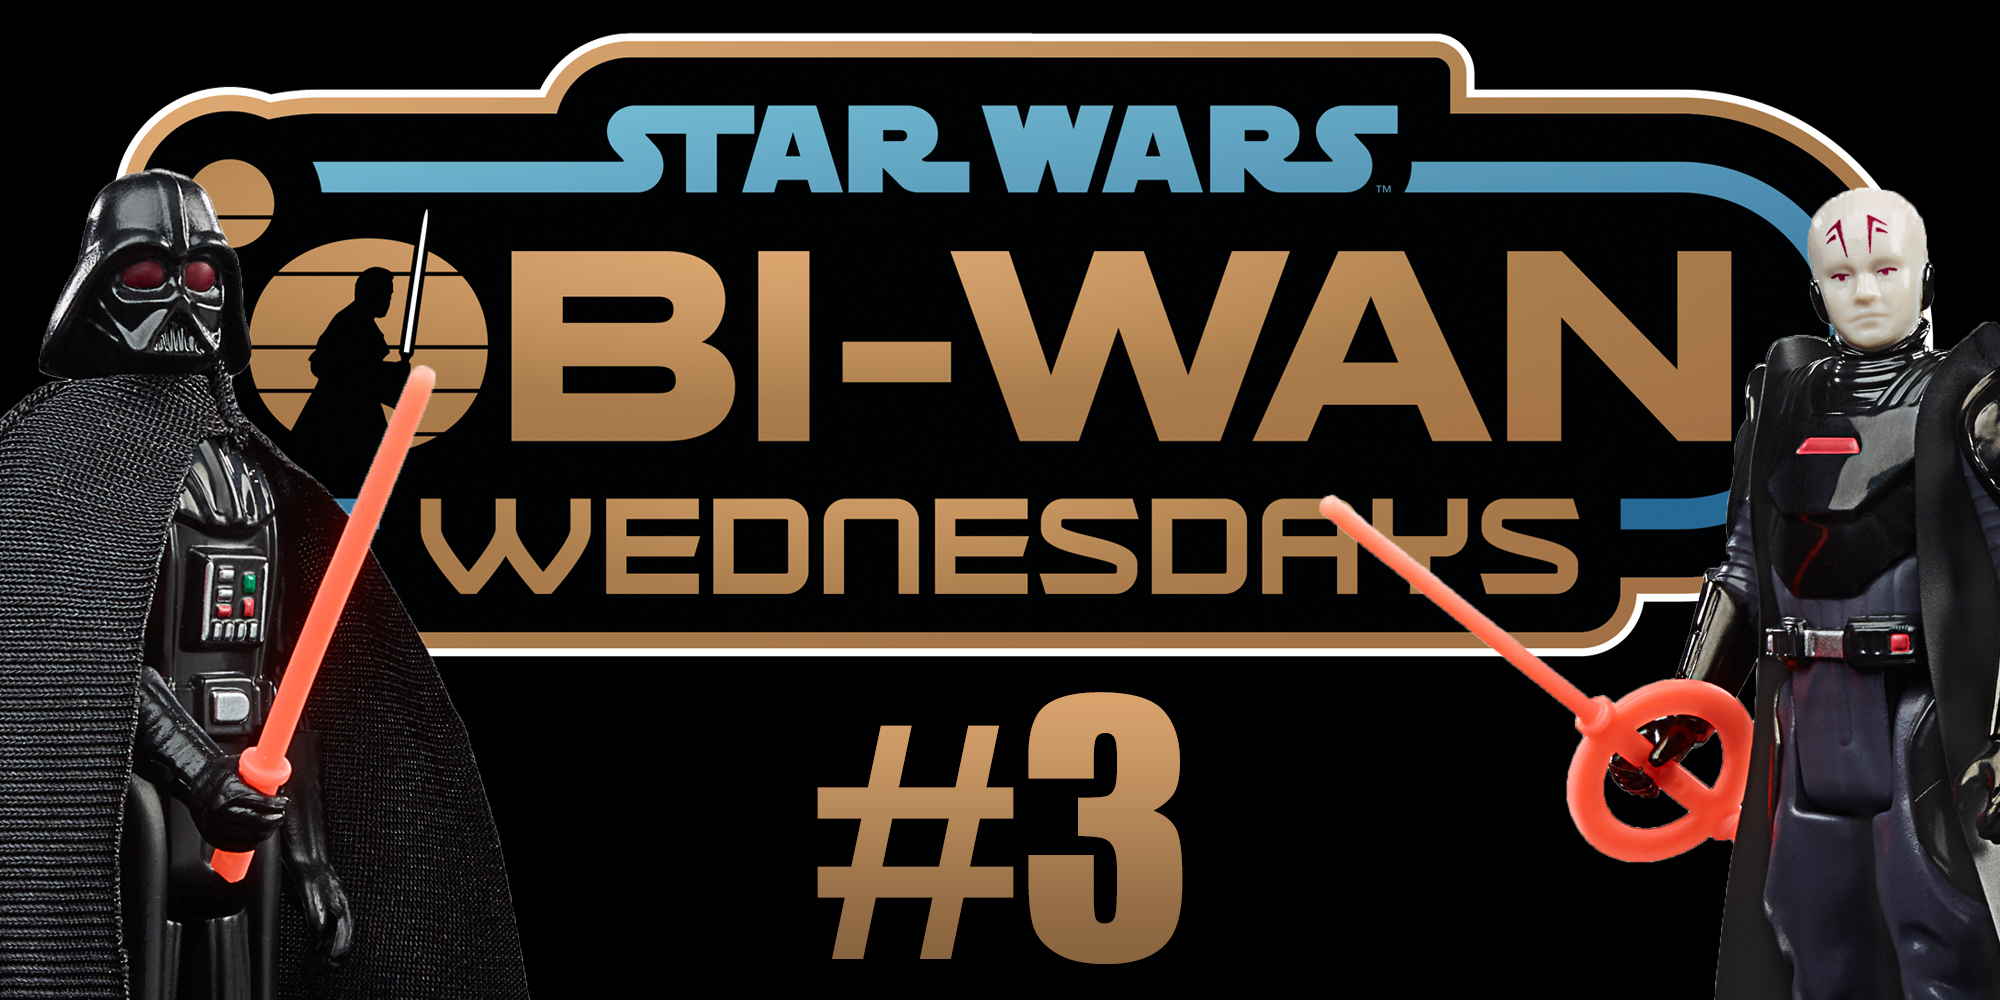 Obi-Wan Wednesdays - Week 3